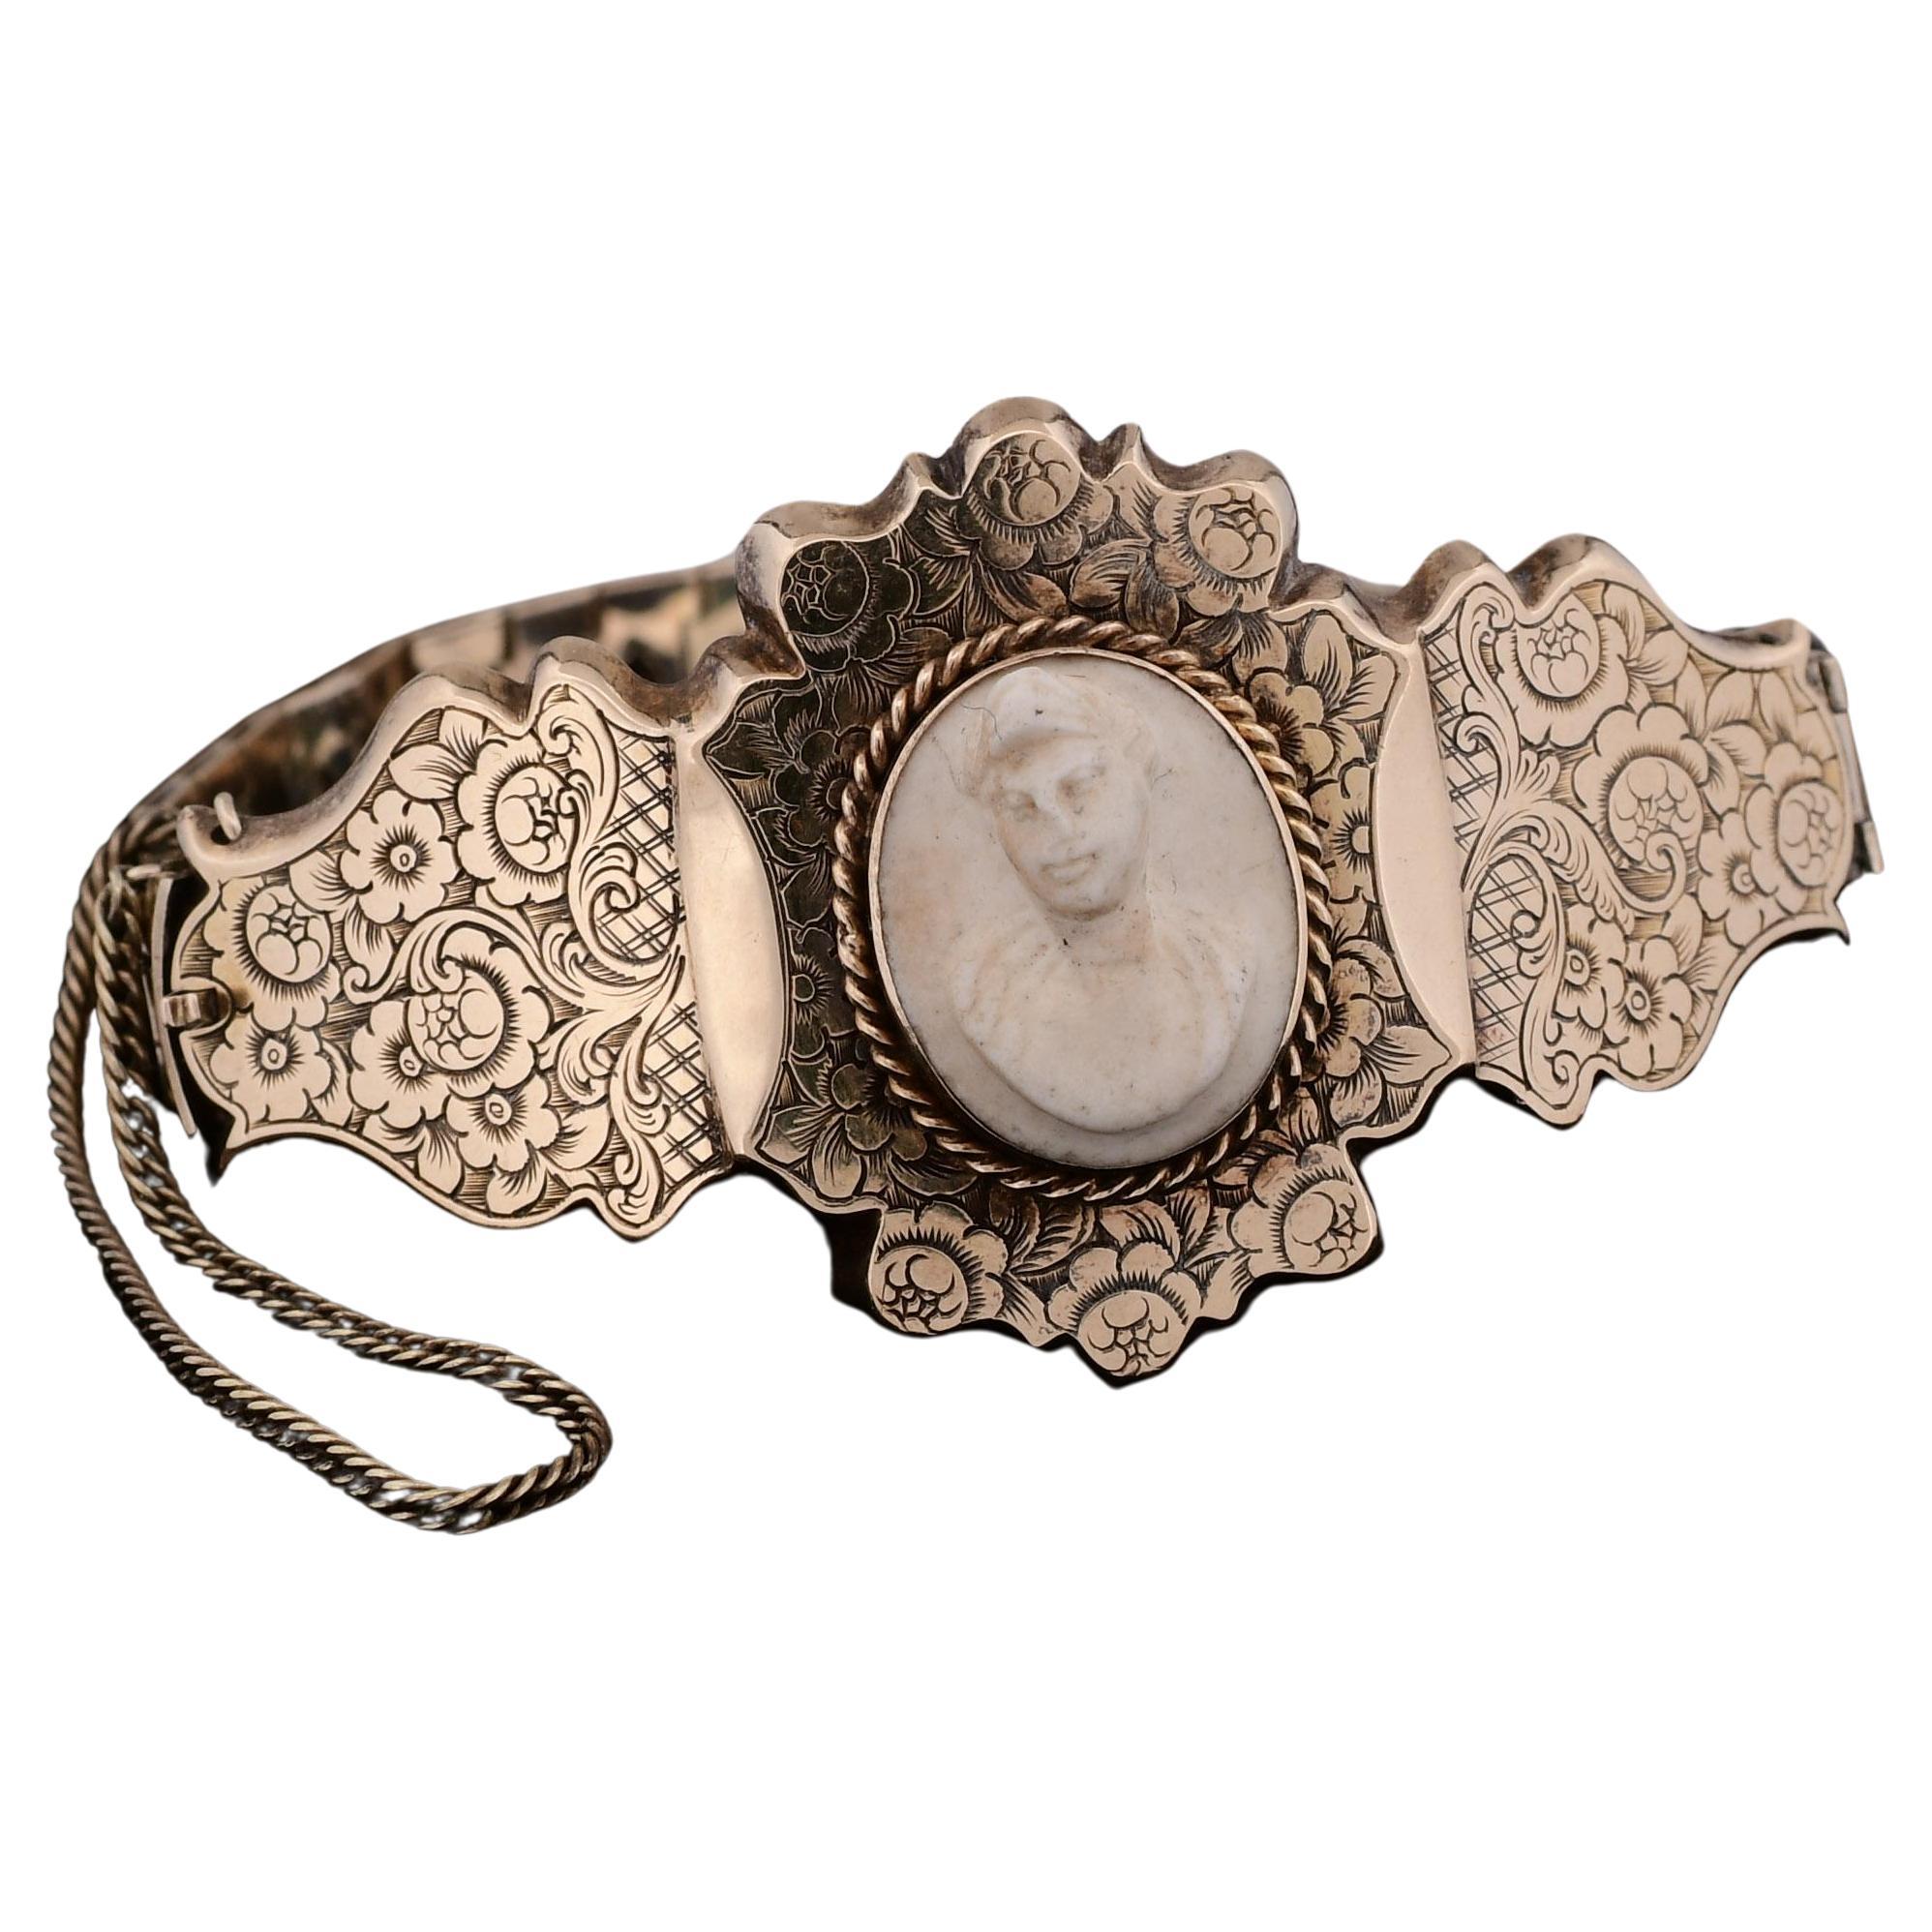 Antique Victorian Cameo Bracelet with Ornate Floral Engraving 14K Gold